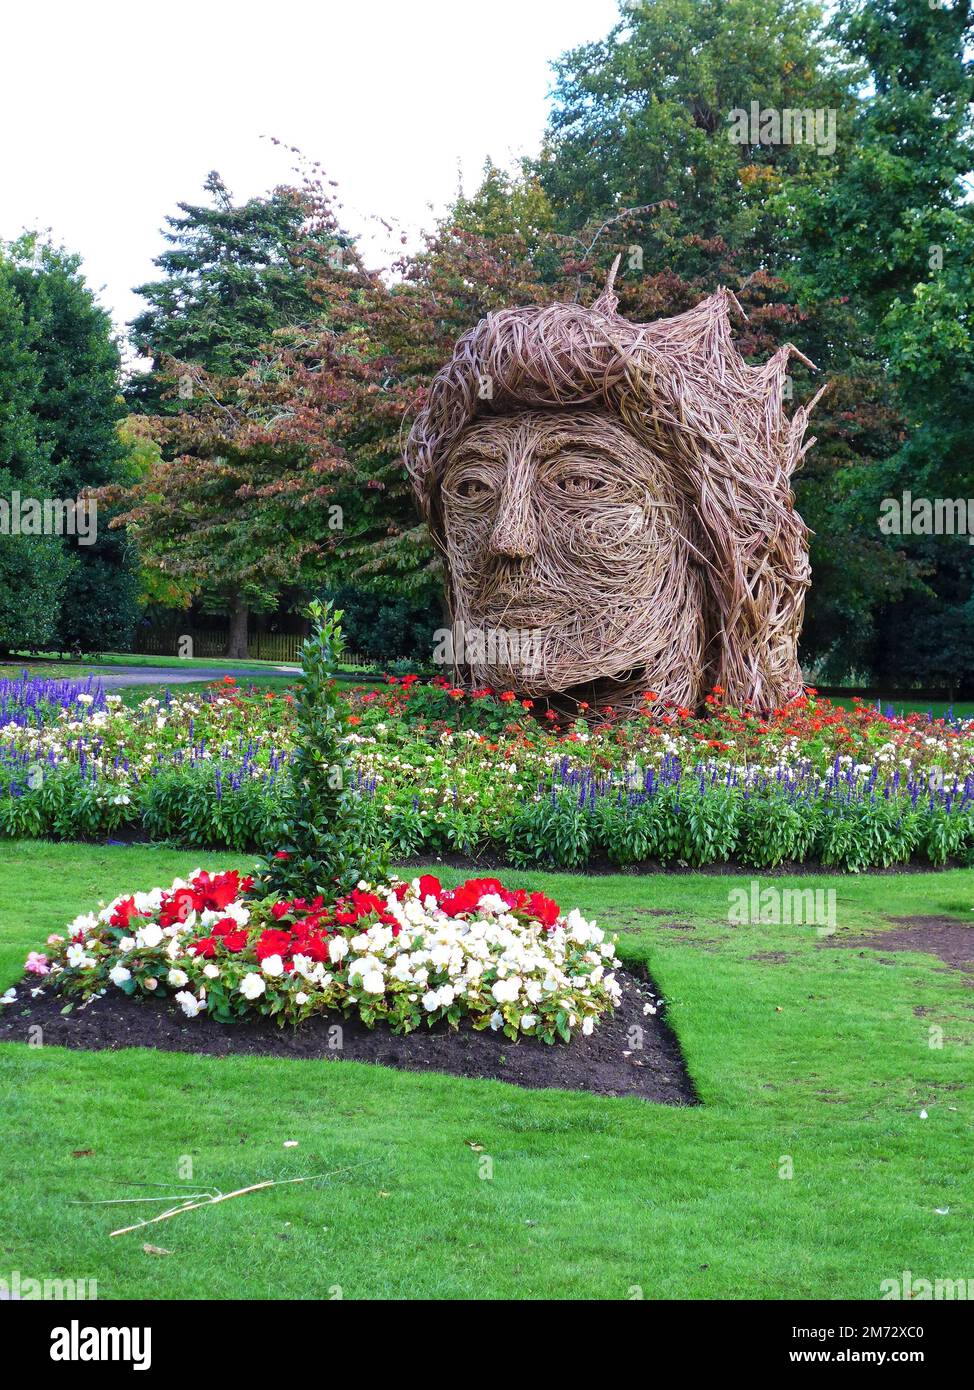 Sculpture en osier de la reine Elisabeth par Sarah Gallagher-Hayes. Chester, Angleterre. Banque D'Images